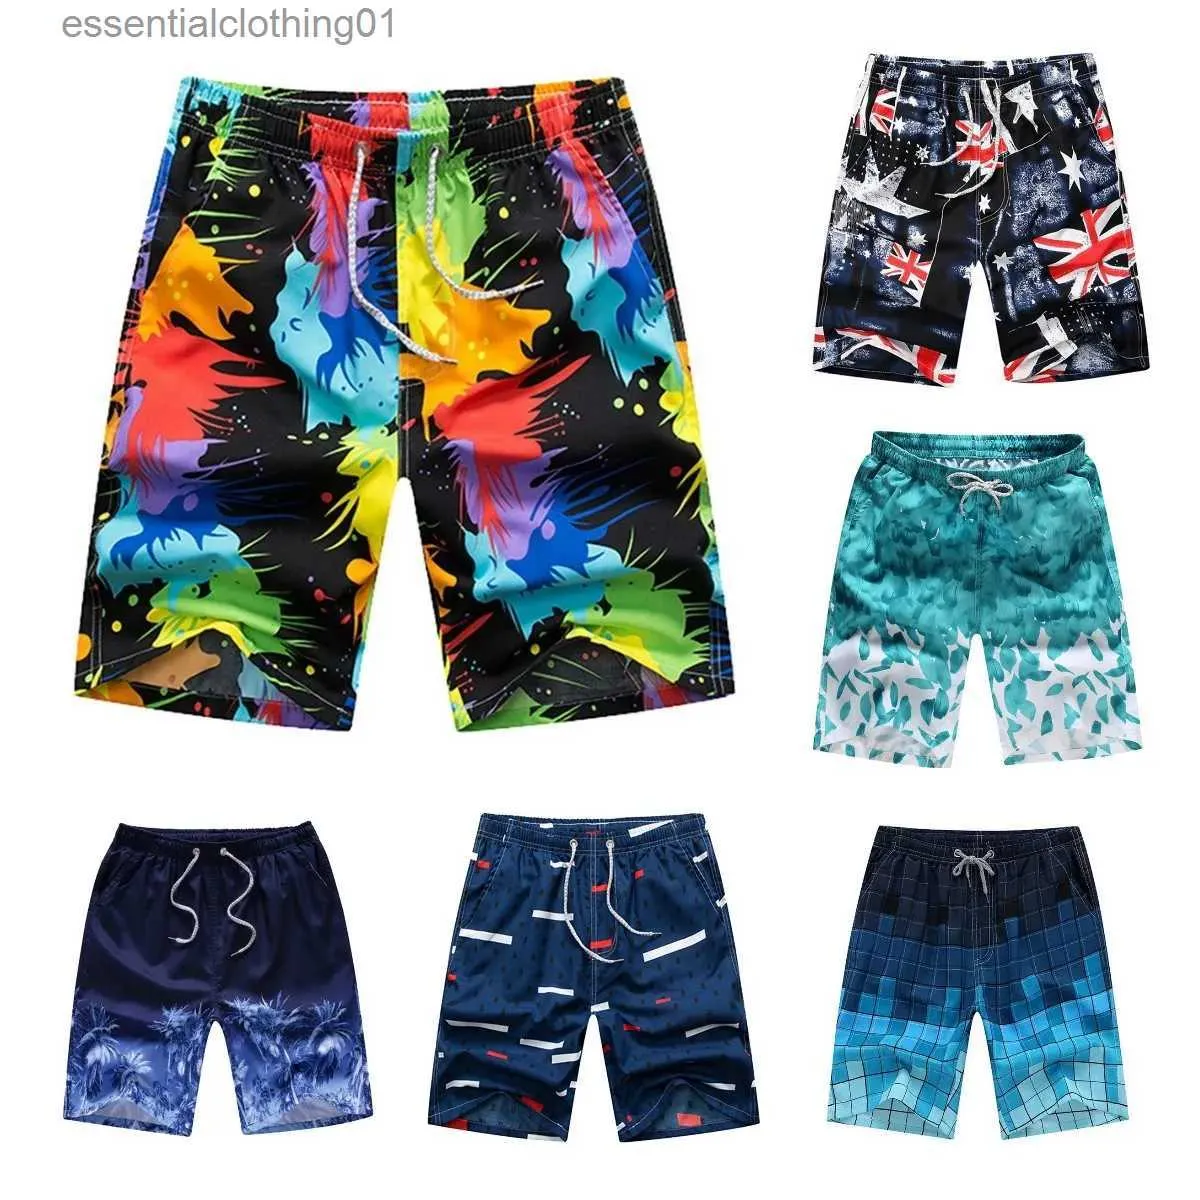 Calça short masculina calça de praia de verão masculino calça de surf calça casual calças de calças de praia shorts masculinos shorts de toucha l231212